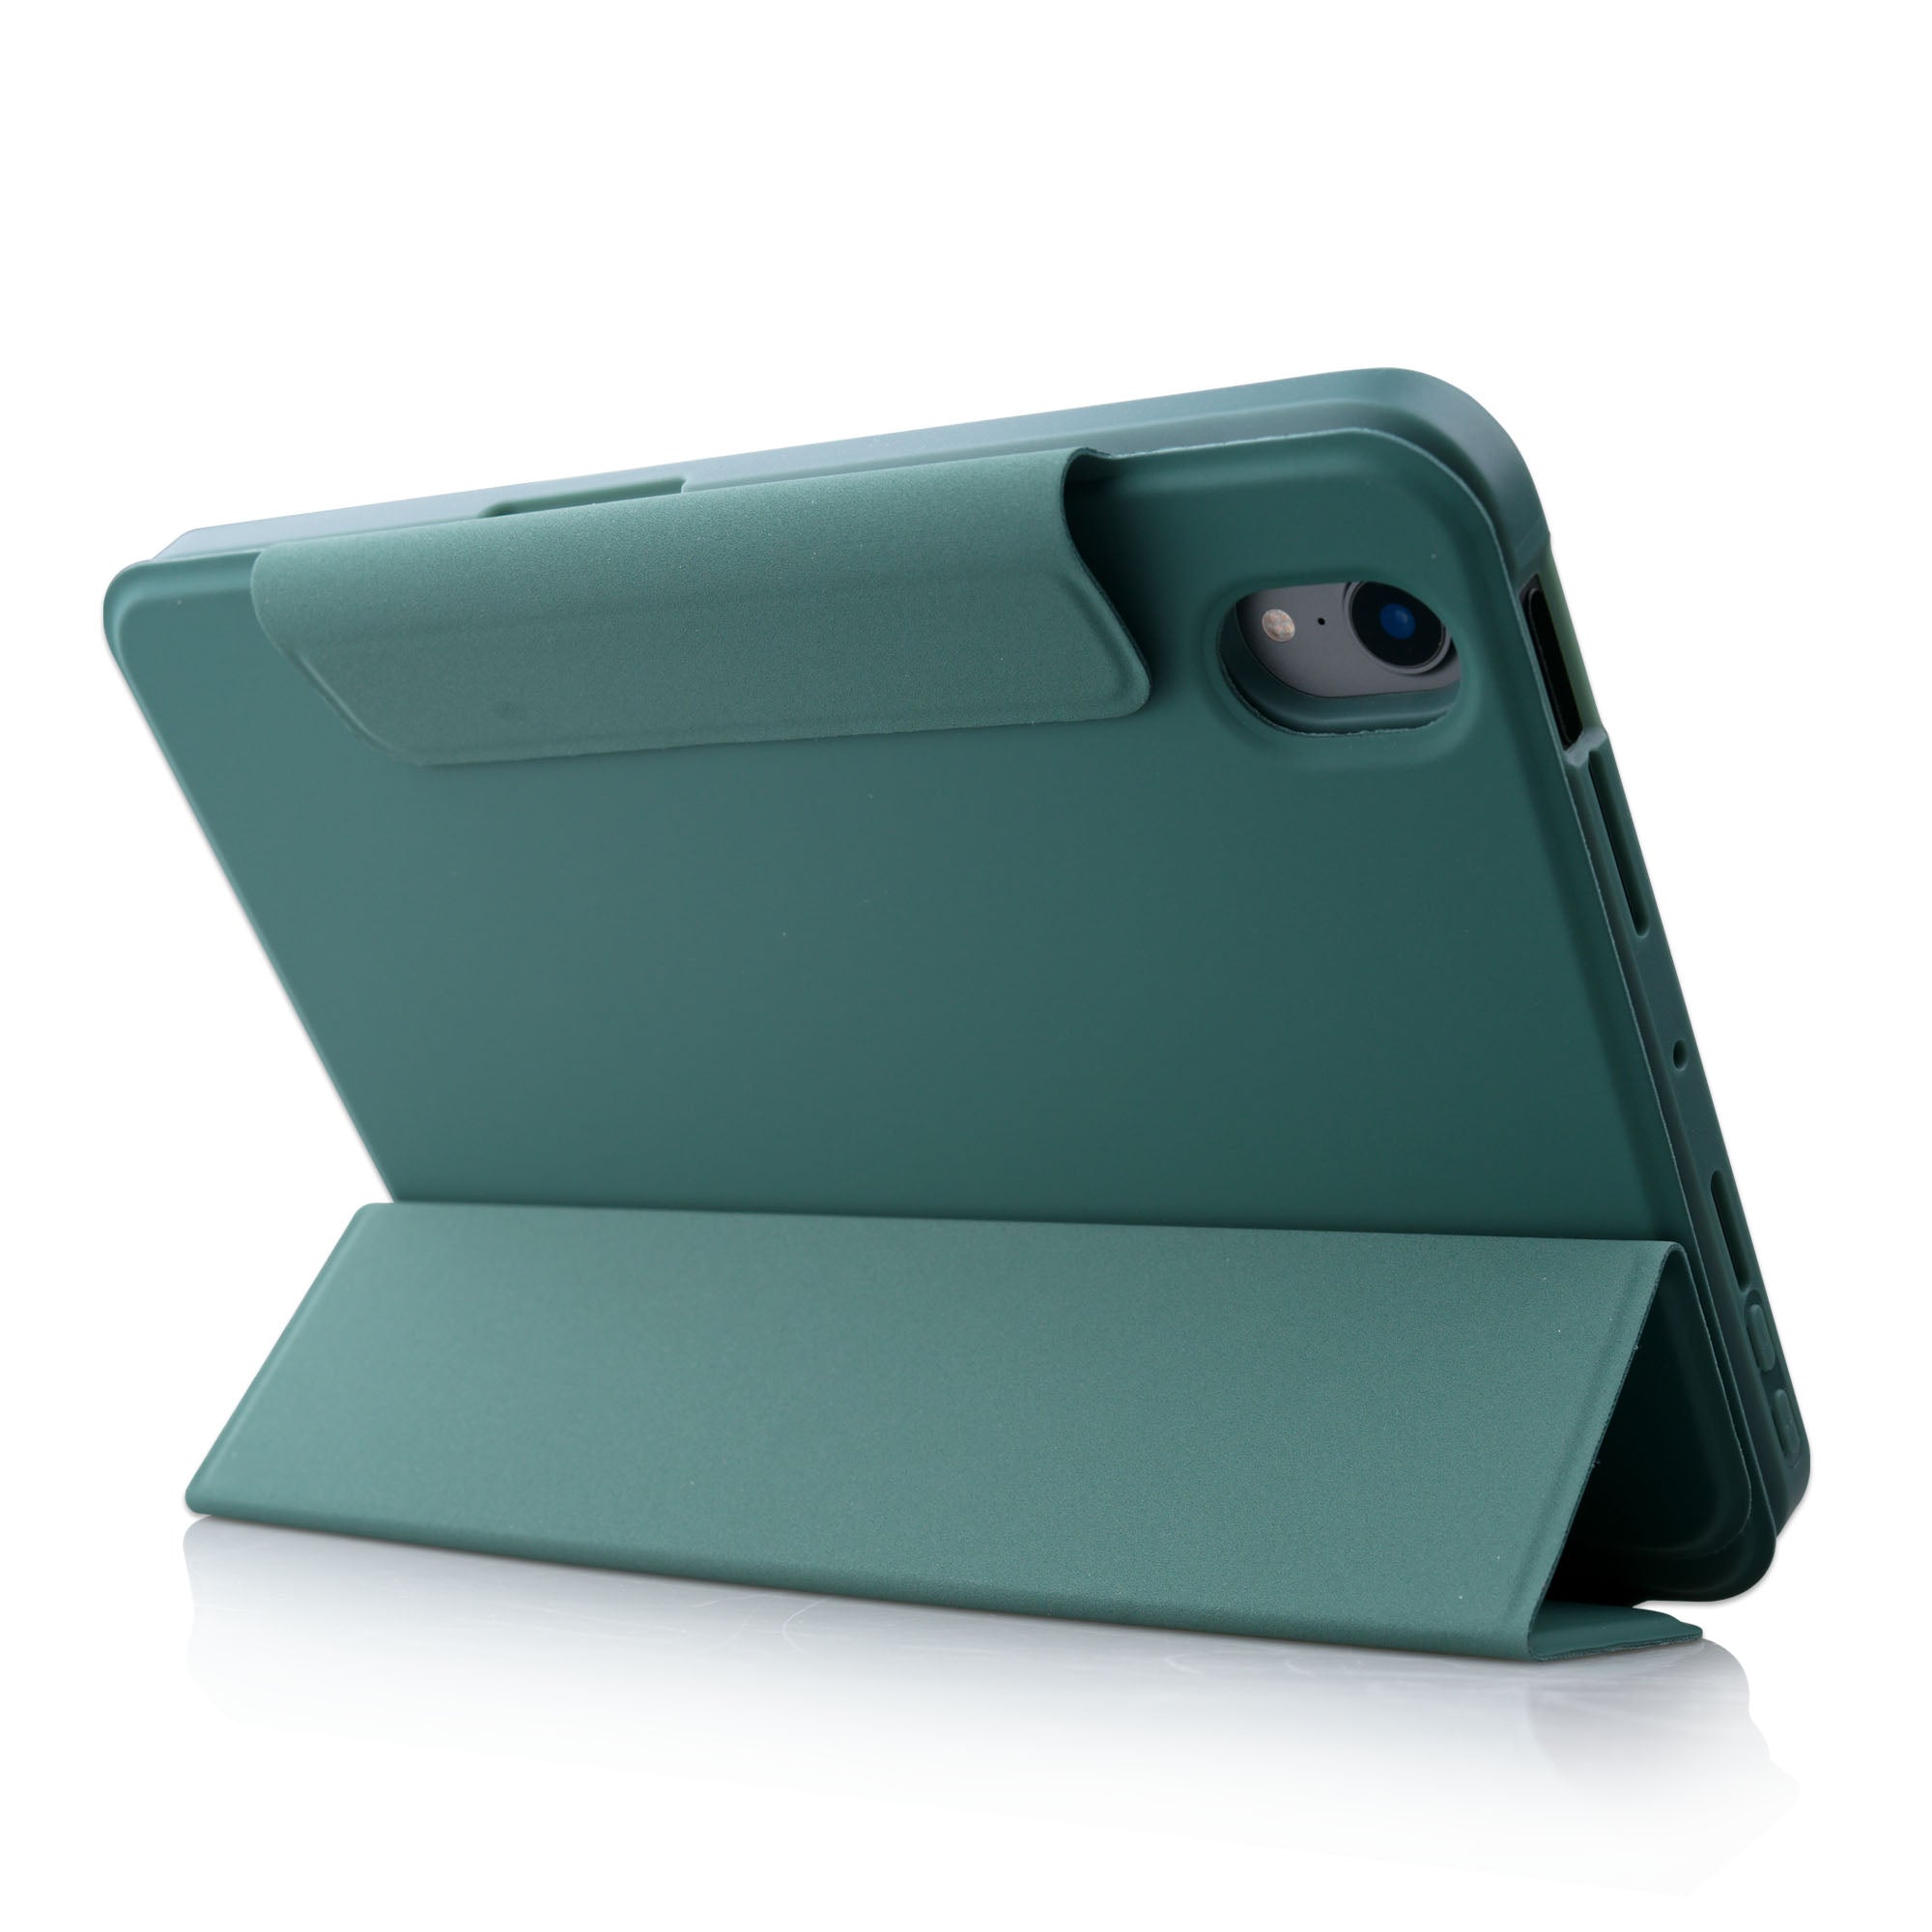 Lanhorse New iPad mini 6 case 8.3inch 2021 release, landscape and portrait viewing standing case.